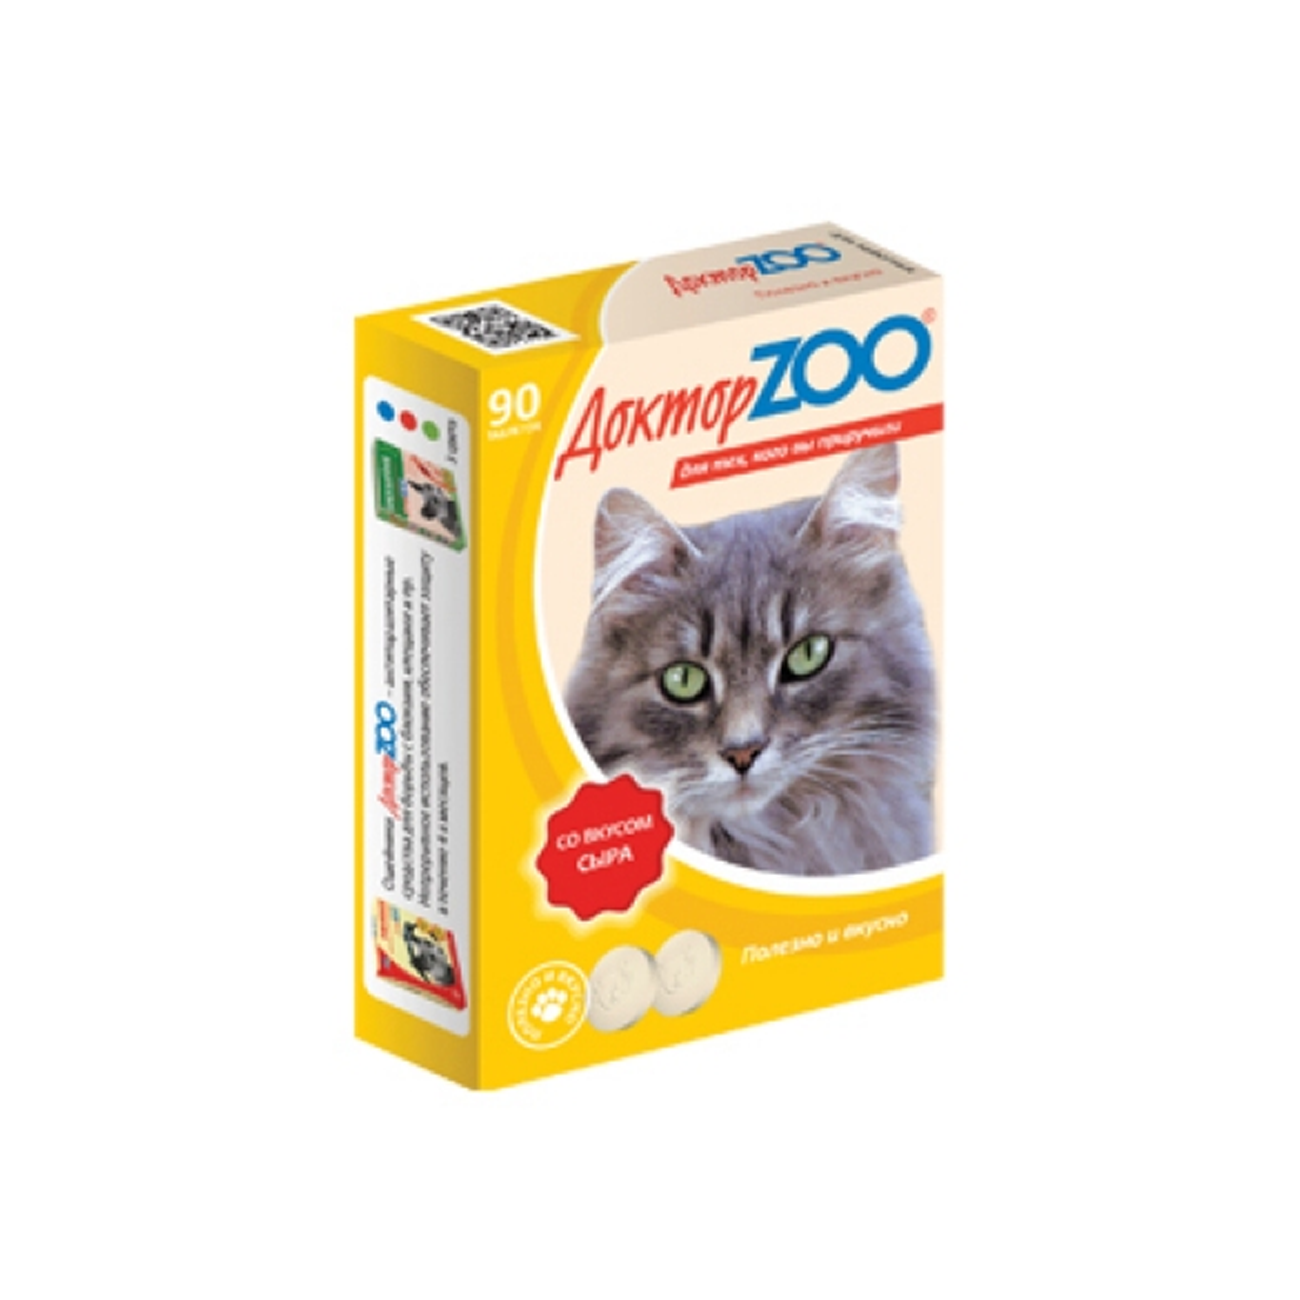 Мультивитаминное лакомство для кошек Доктор ZOO со вкусом сыра, 90 табл